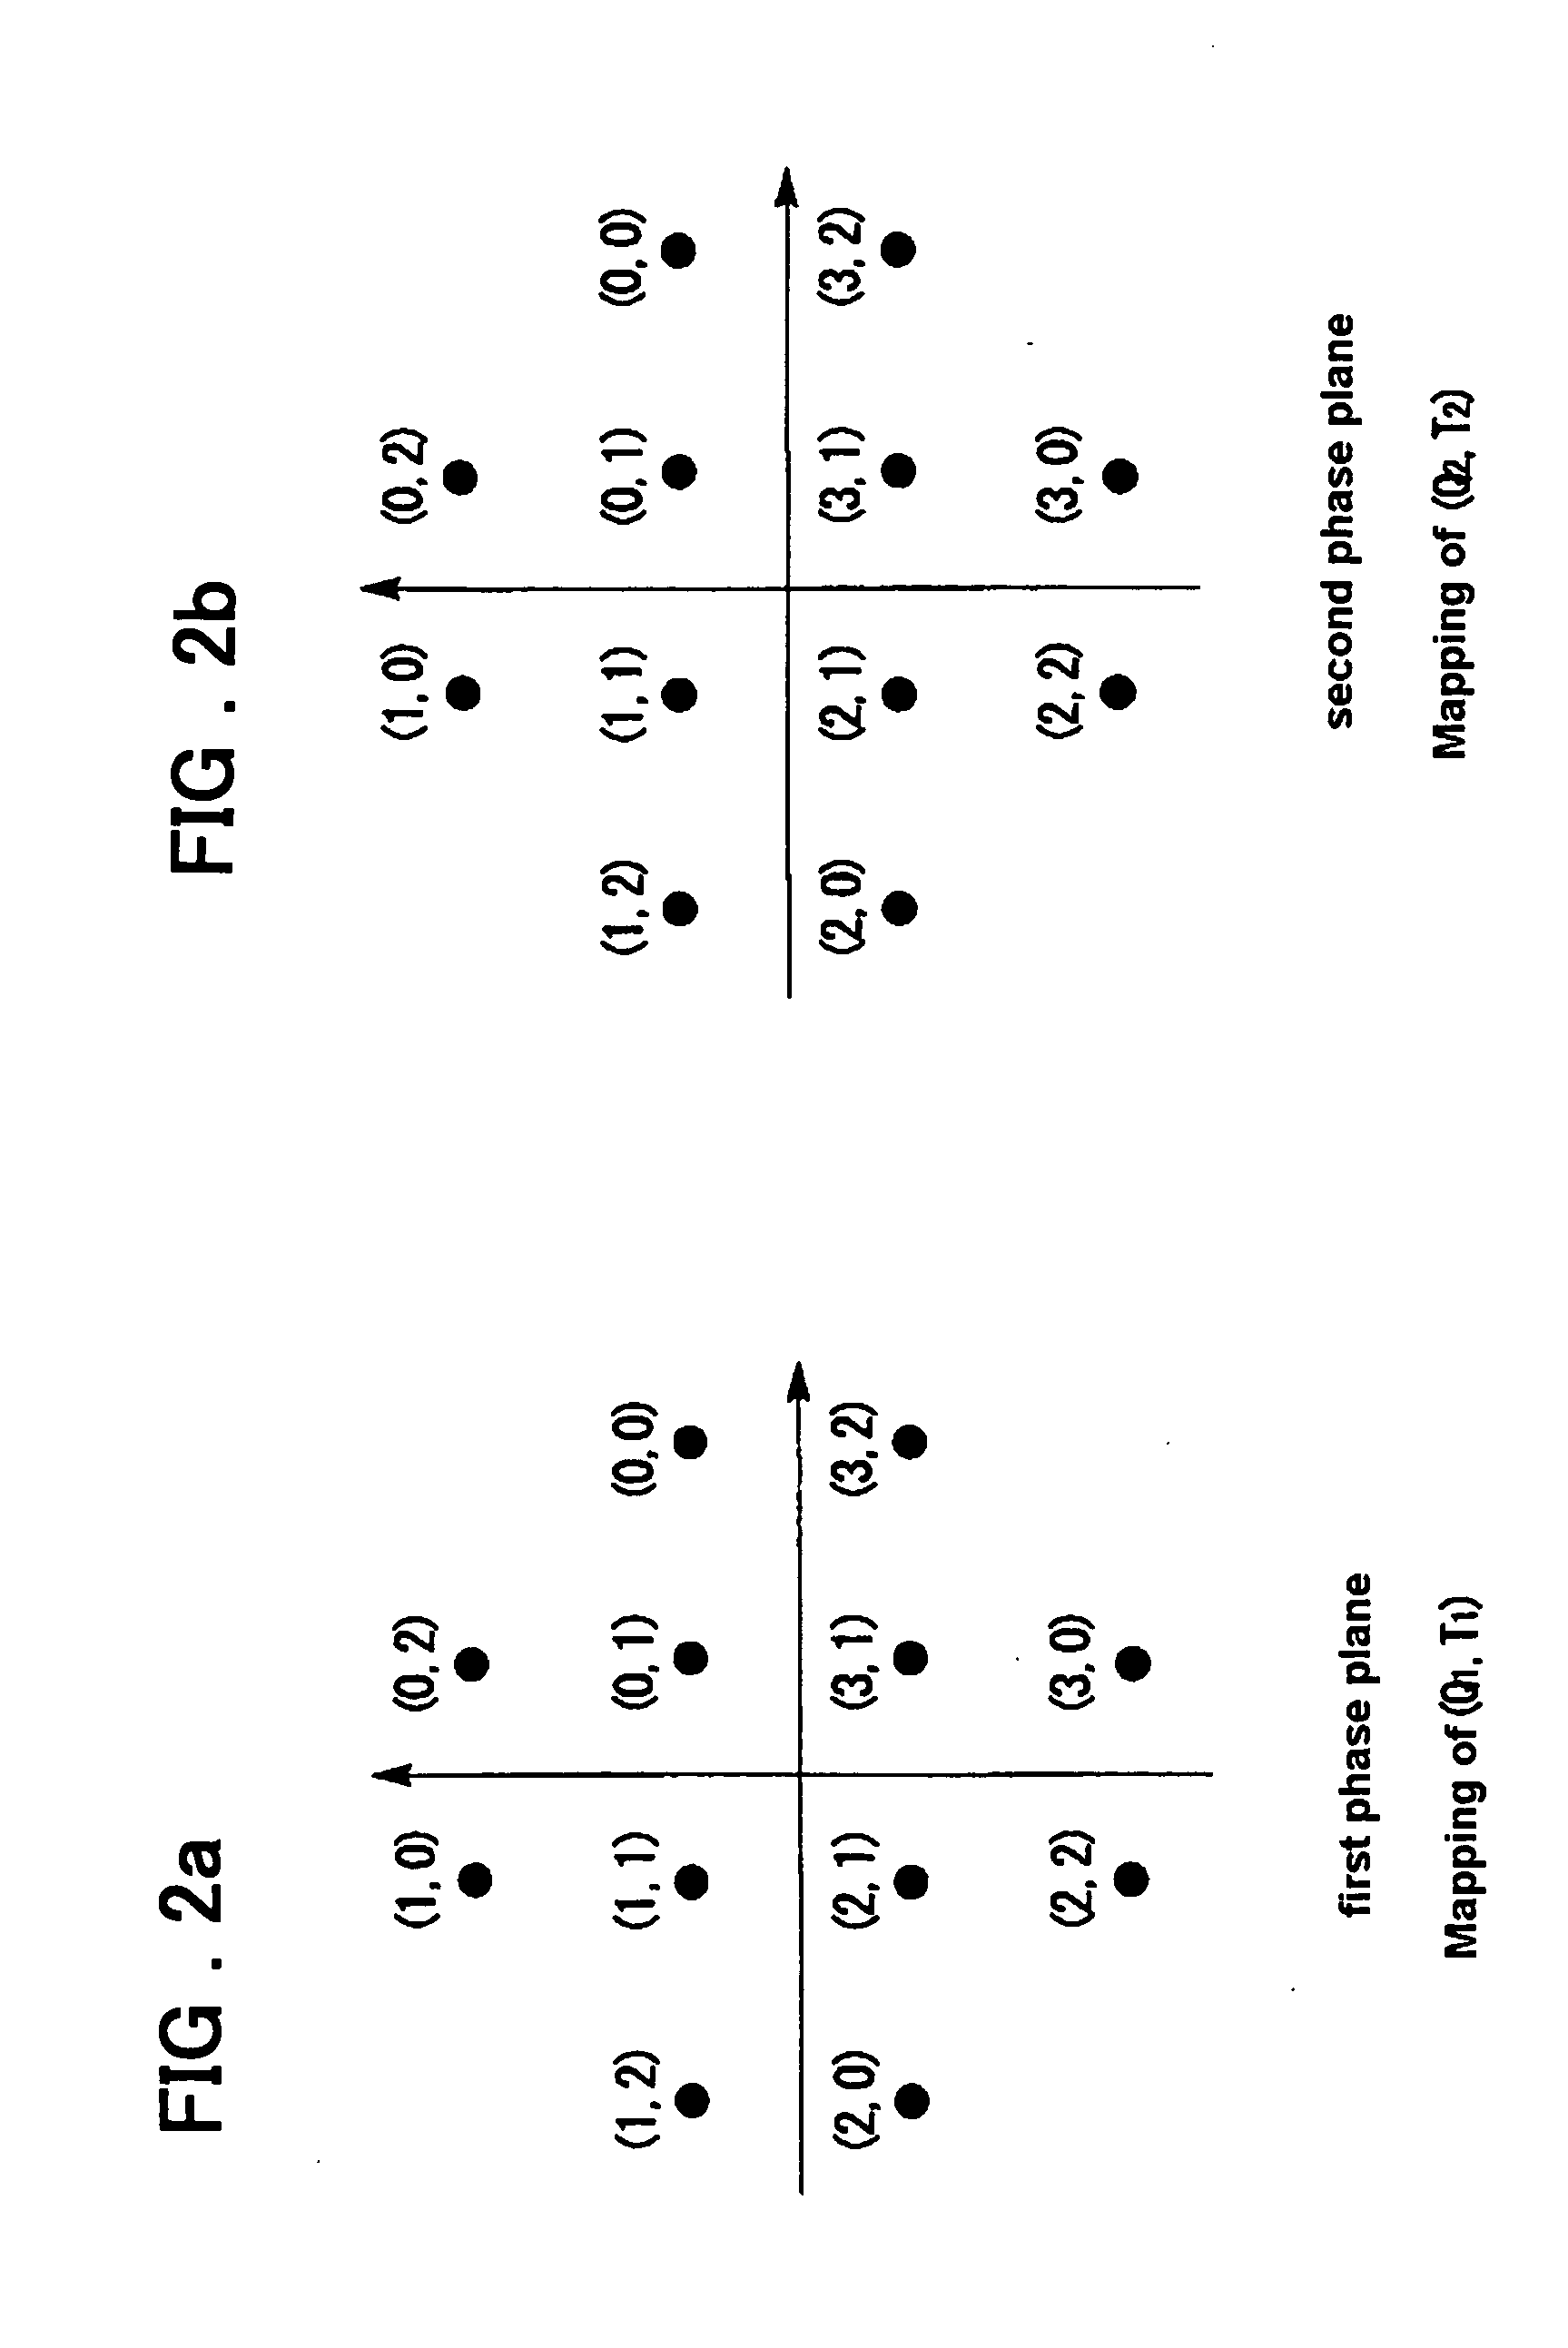 Multi-level modulation method and system